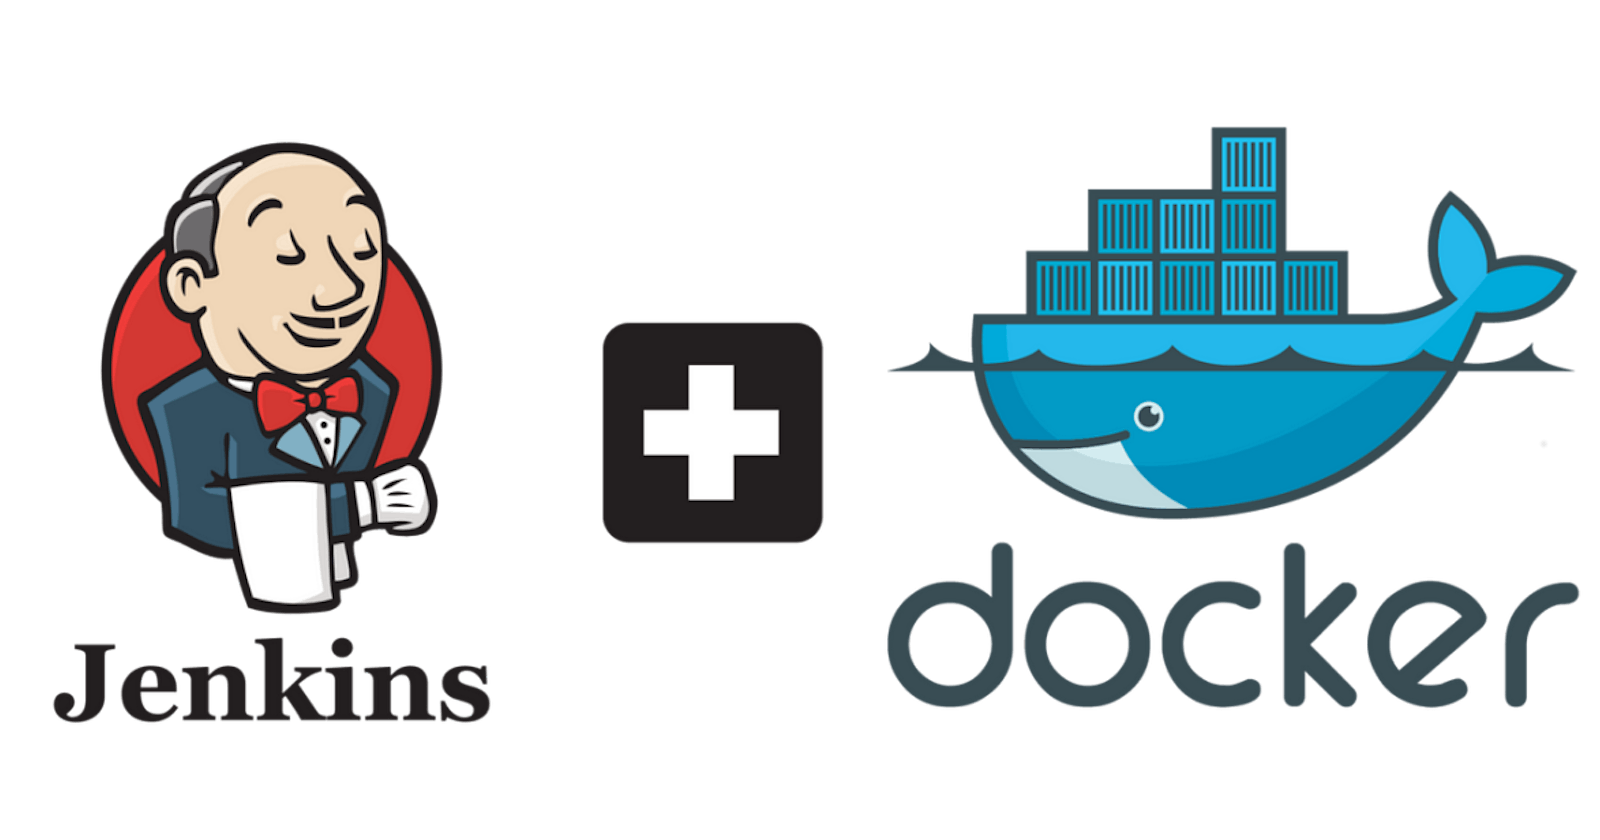 Docker as agent multi stage multi agent deployment using jenkins